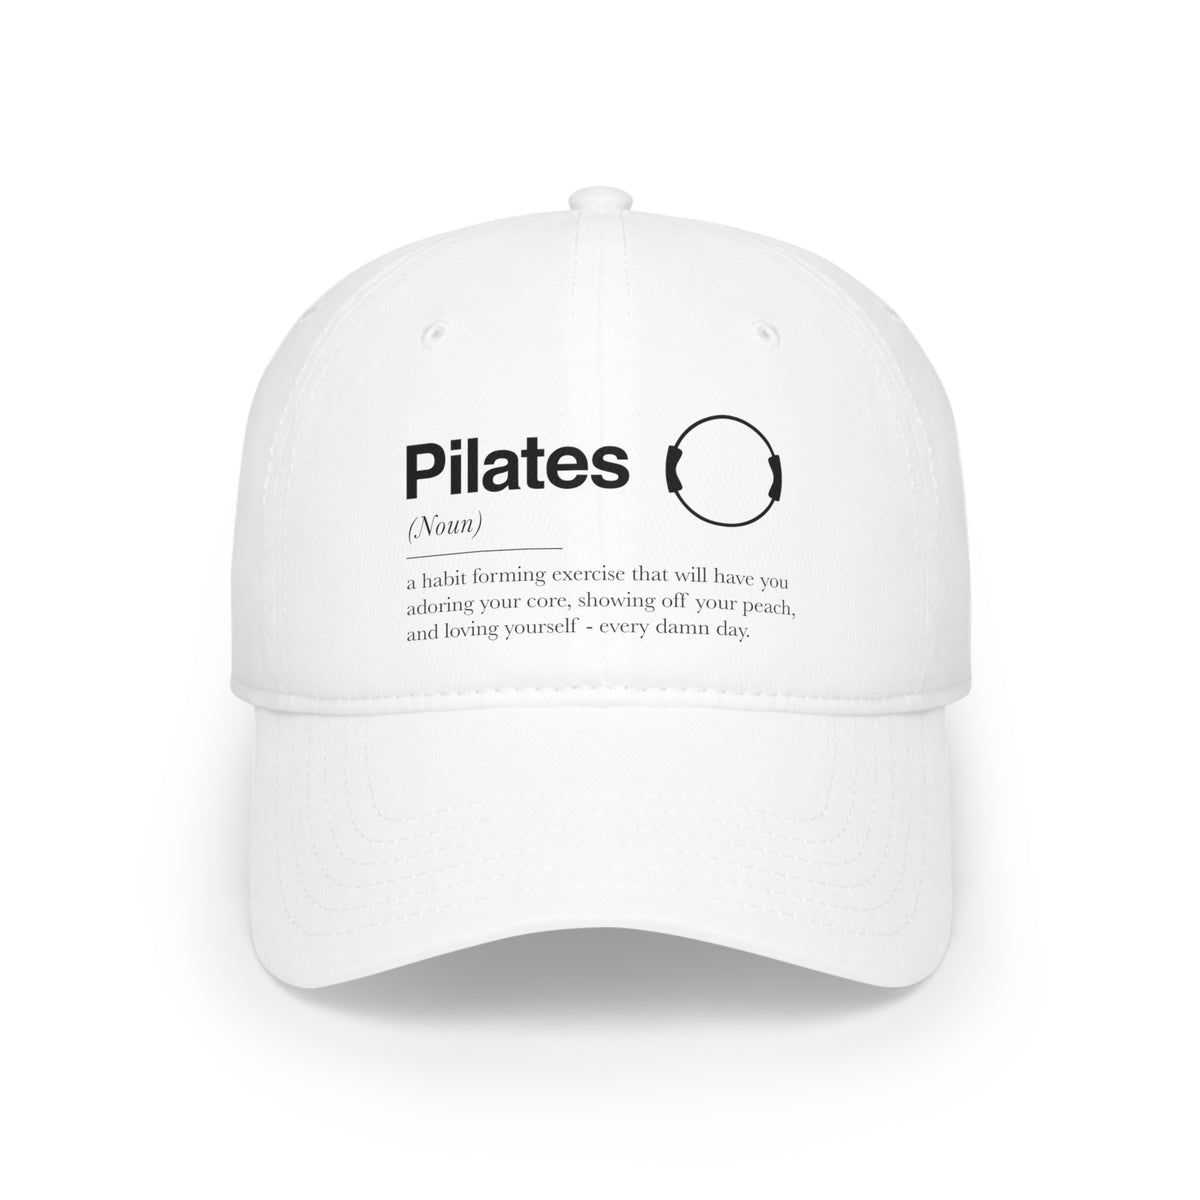 Pilates Definition Baseball Cap